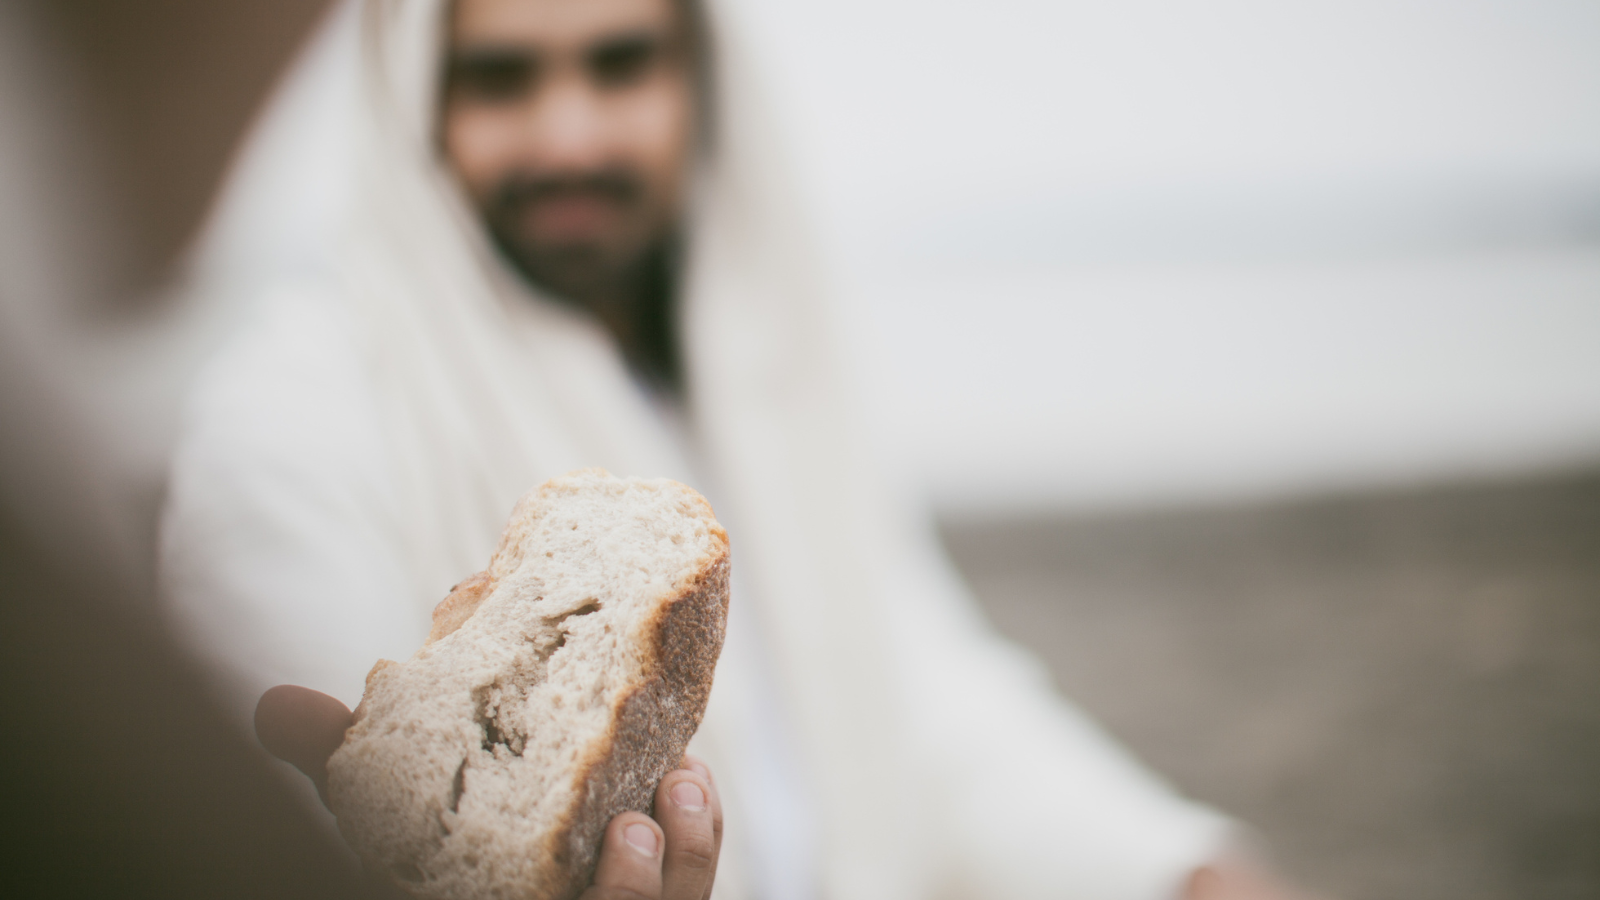 Man who looks like Jesus holding bread